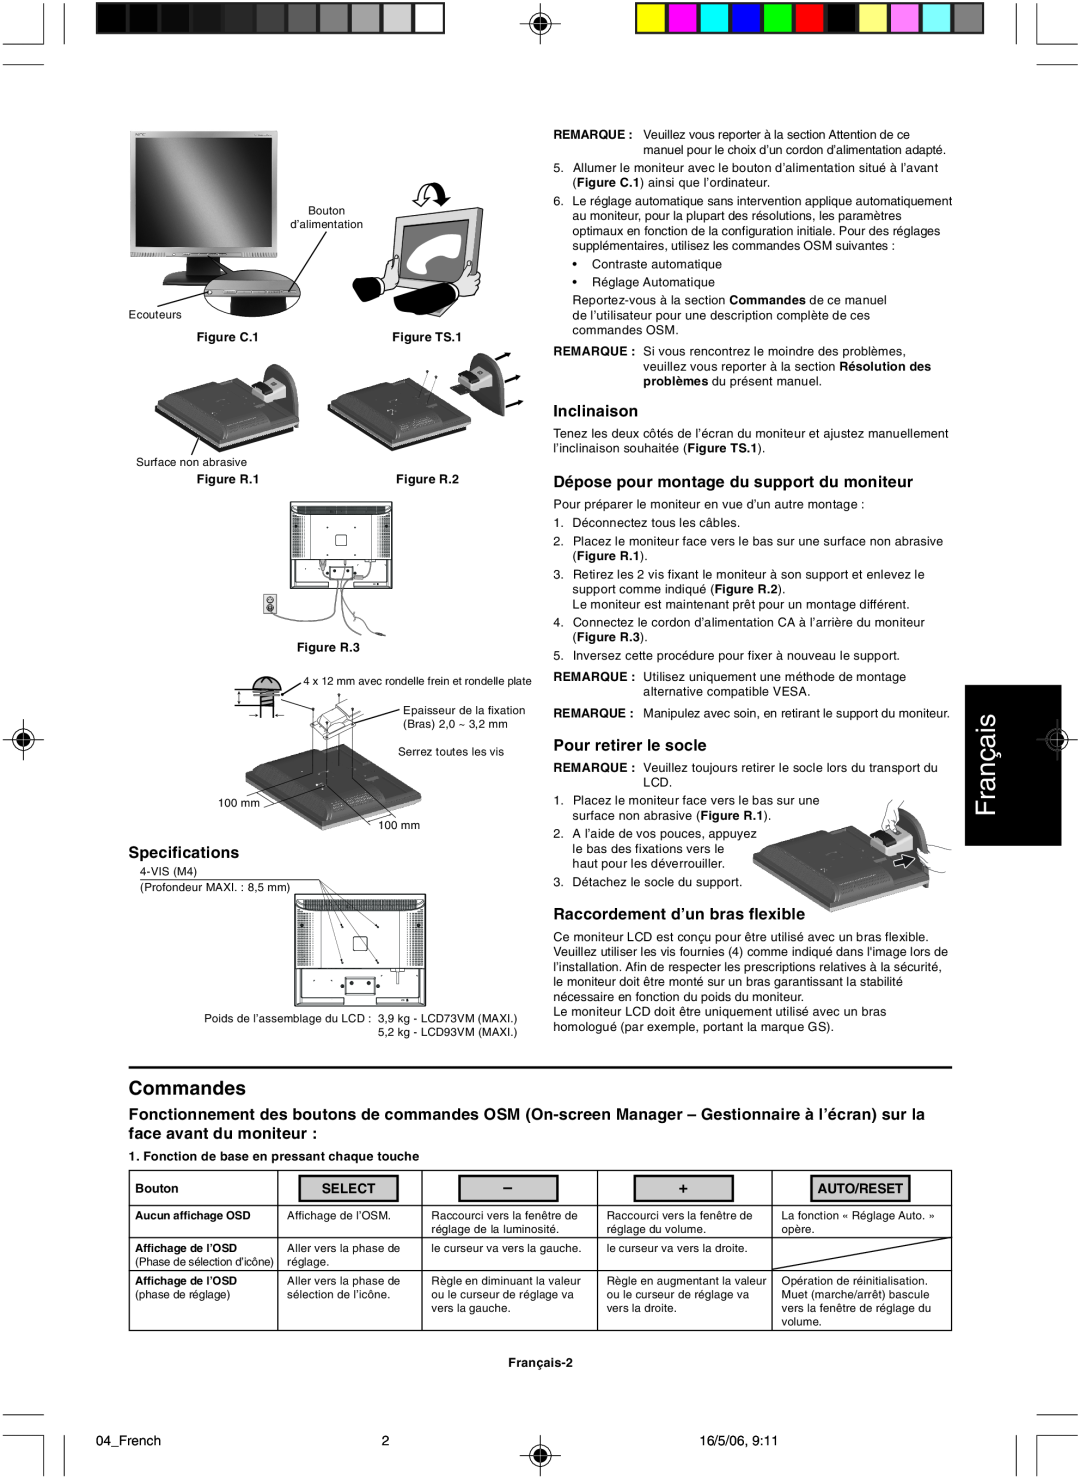 NEC LCD73VM user manual Français, Commandes, Select, Auto/Reset 